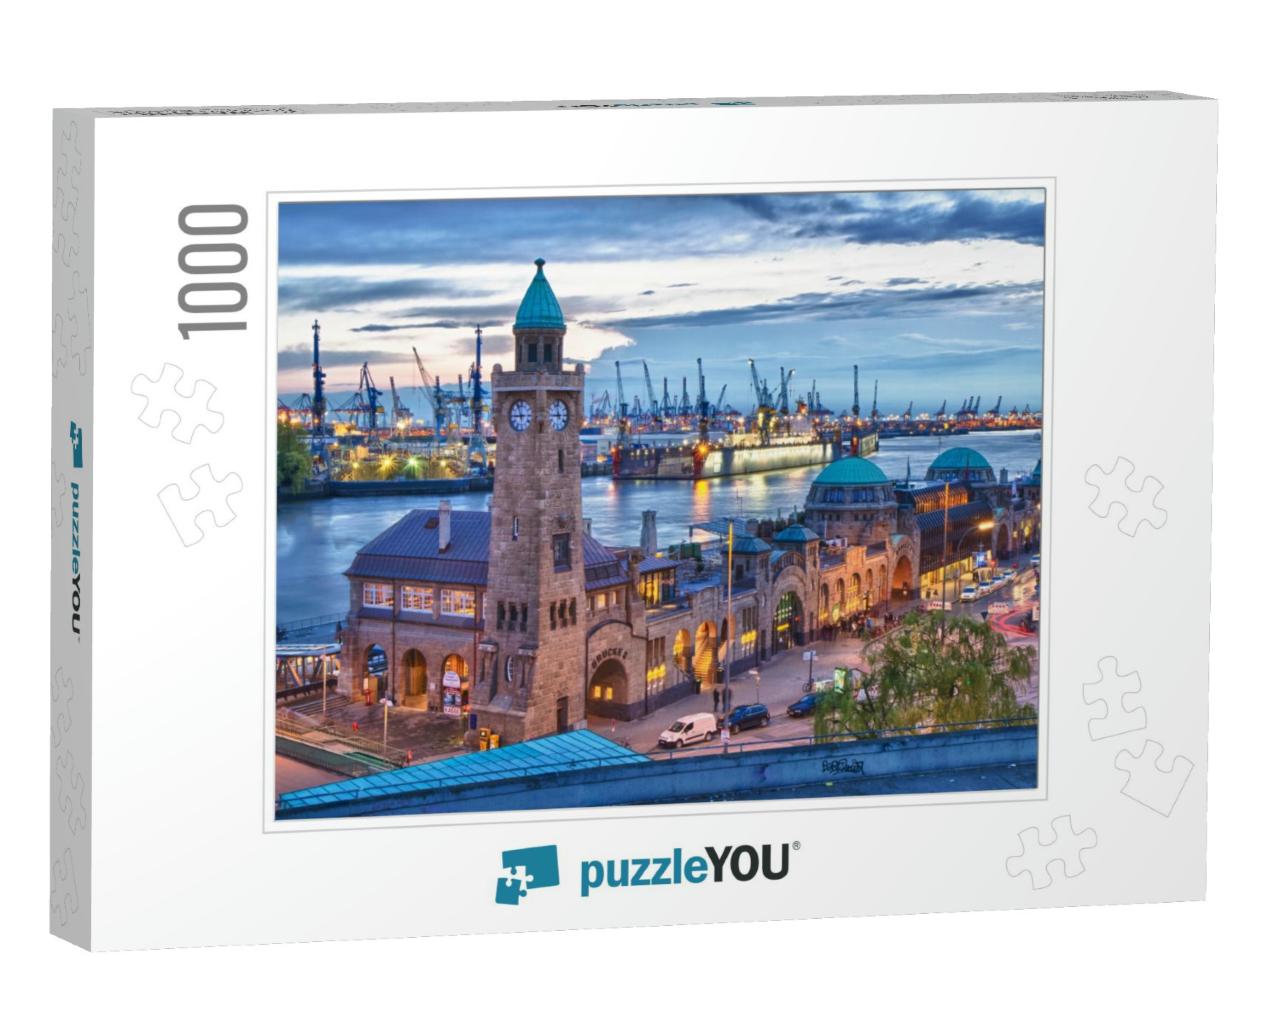 Hamburg Harbor, Germany... Jigsaw Puzzle with 1000 pieces